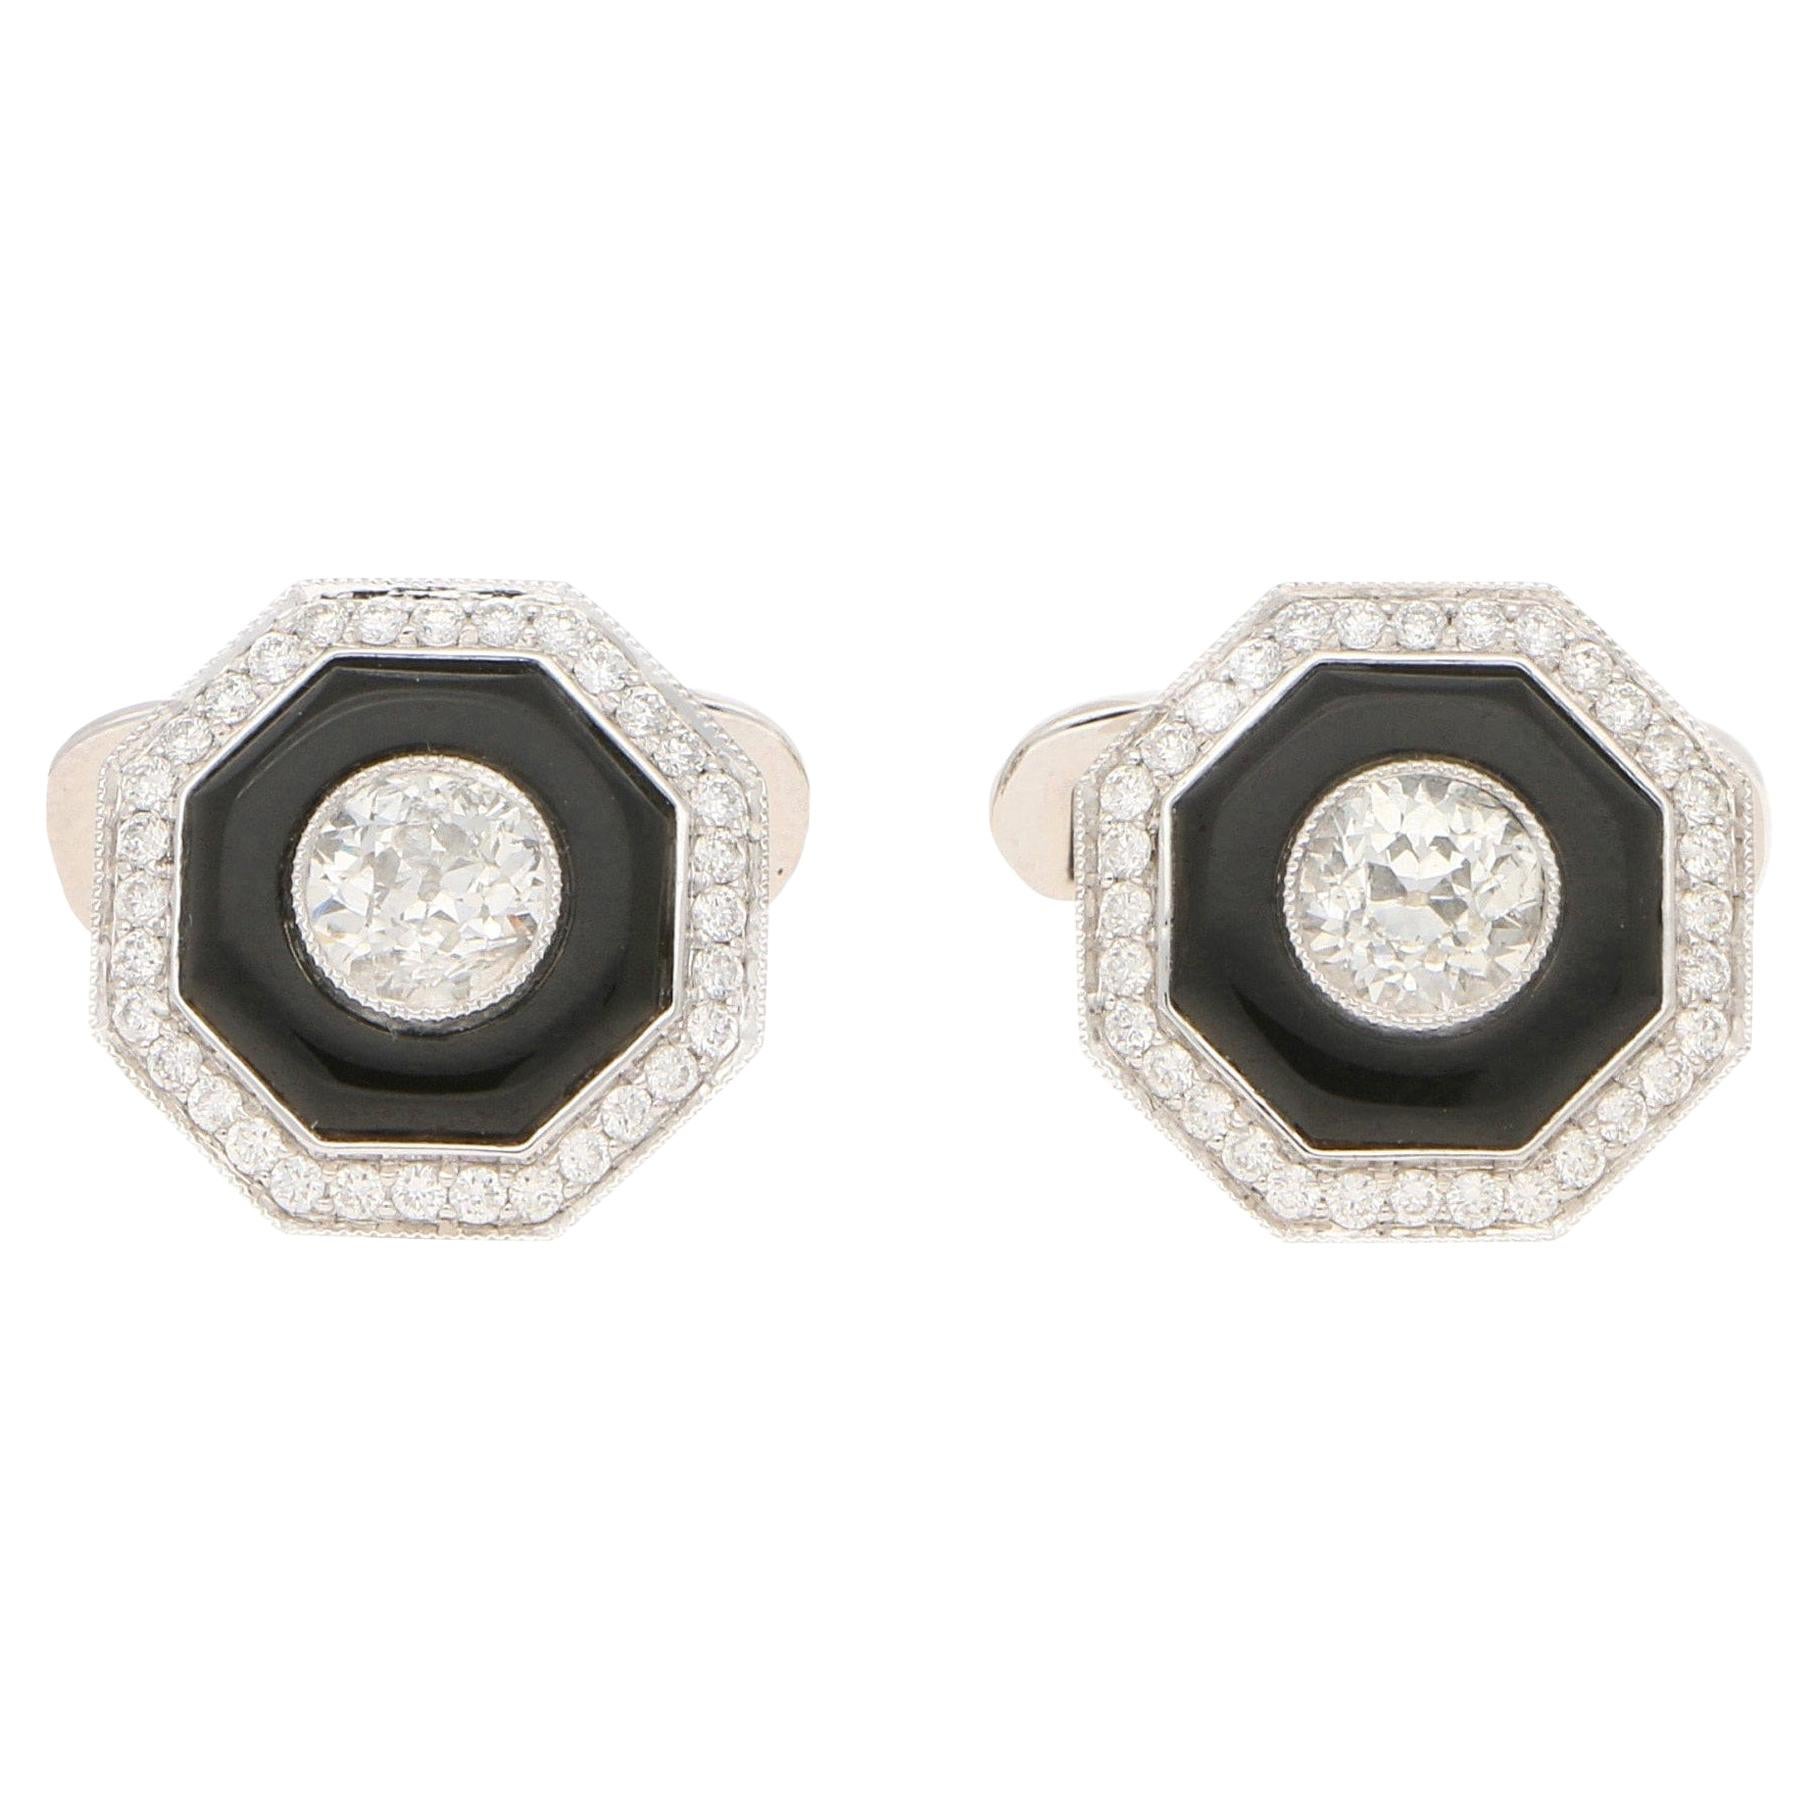 Art Deco Inspired Diamond and Onyx Target Cufflinks Set in Platinum